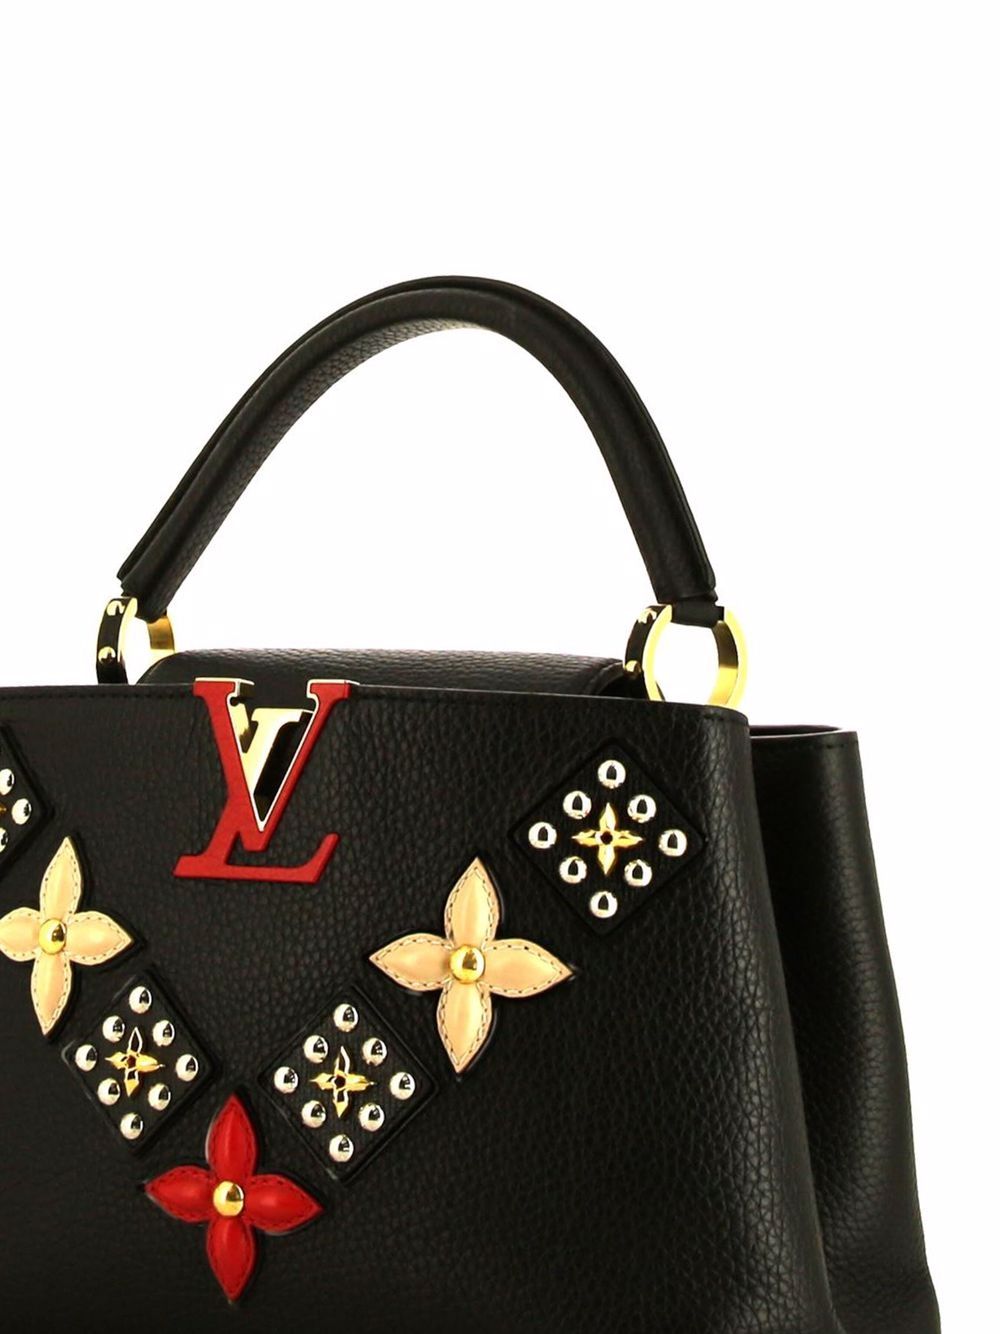 Louis Vuitton pre-owned Capucines PM handbag